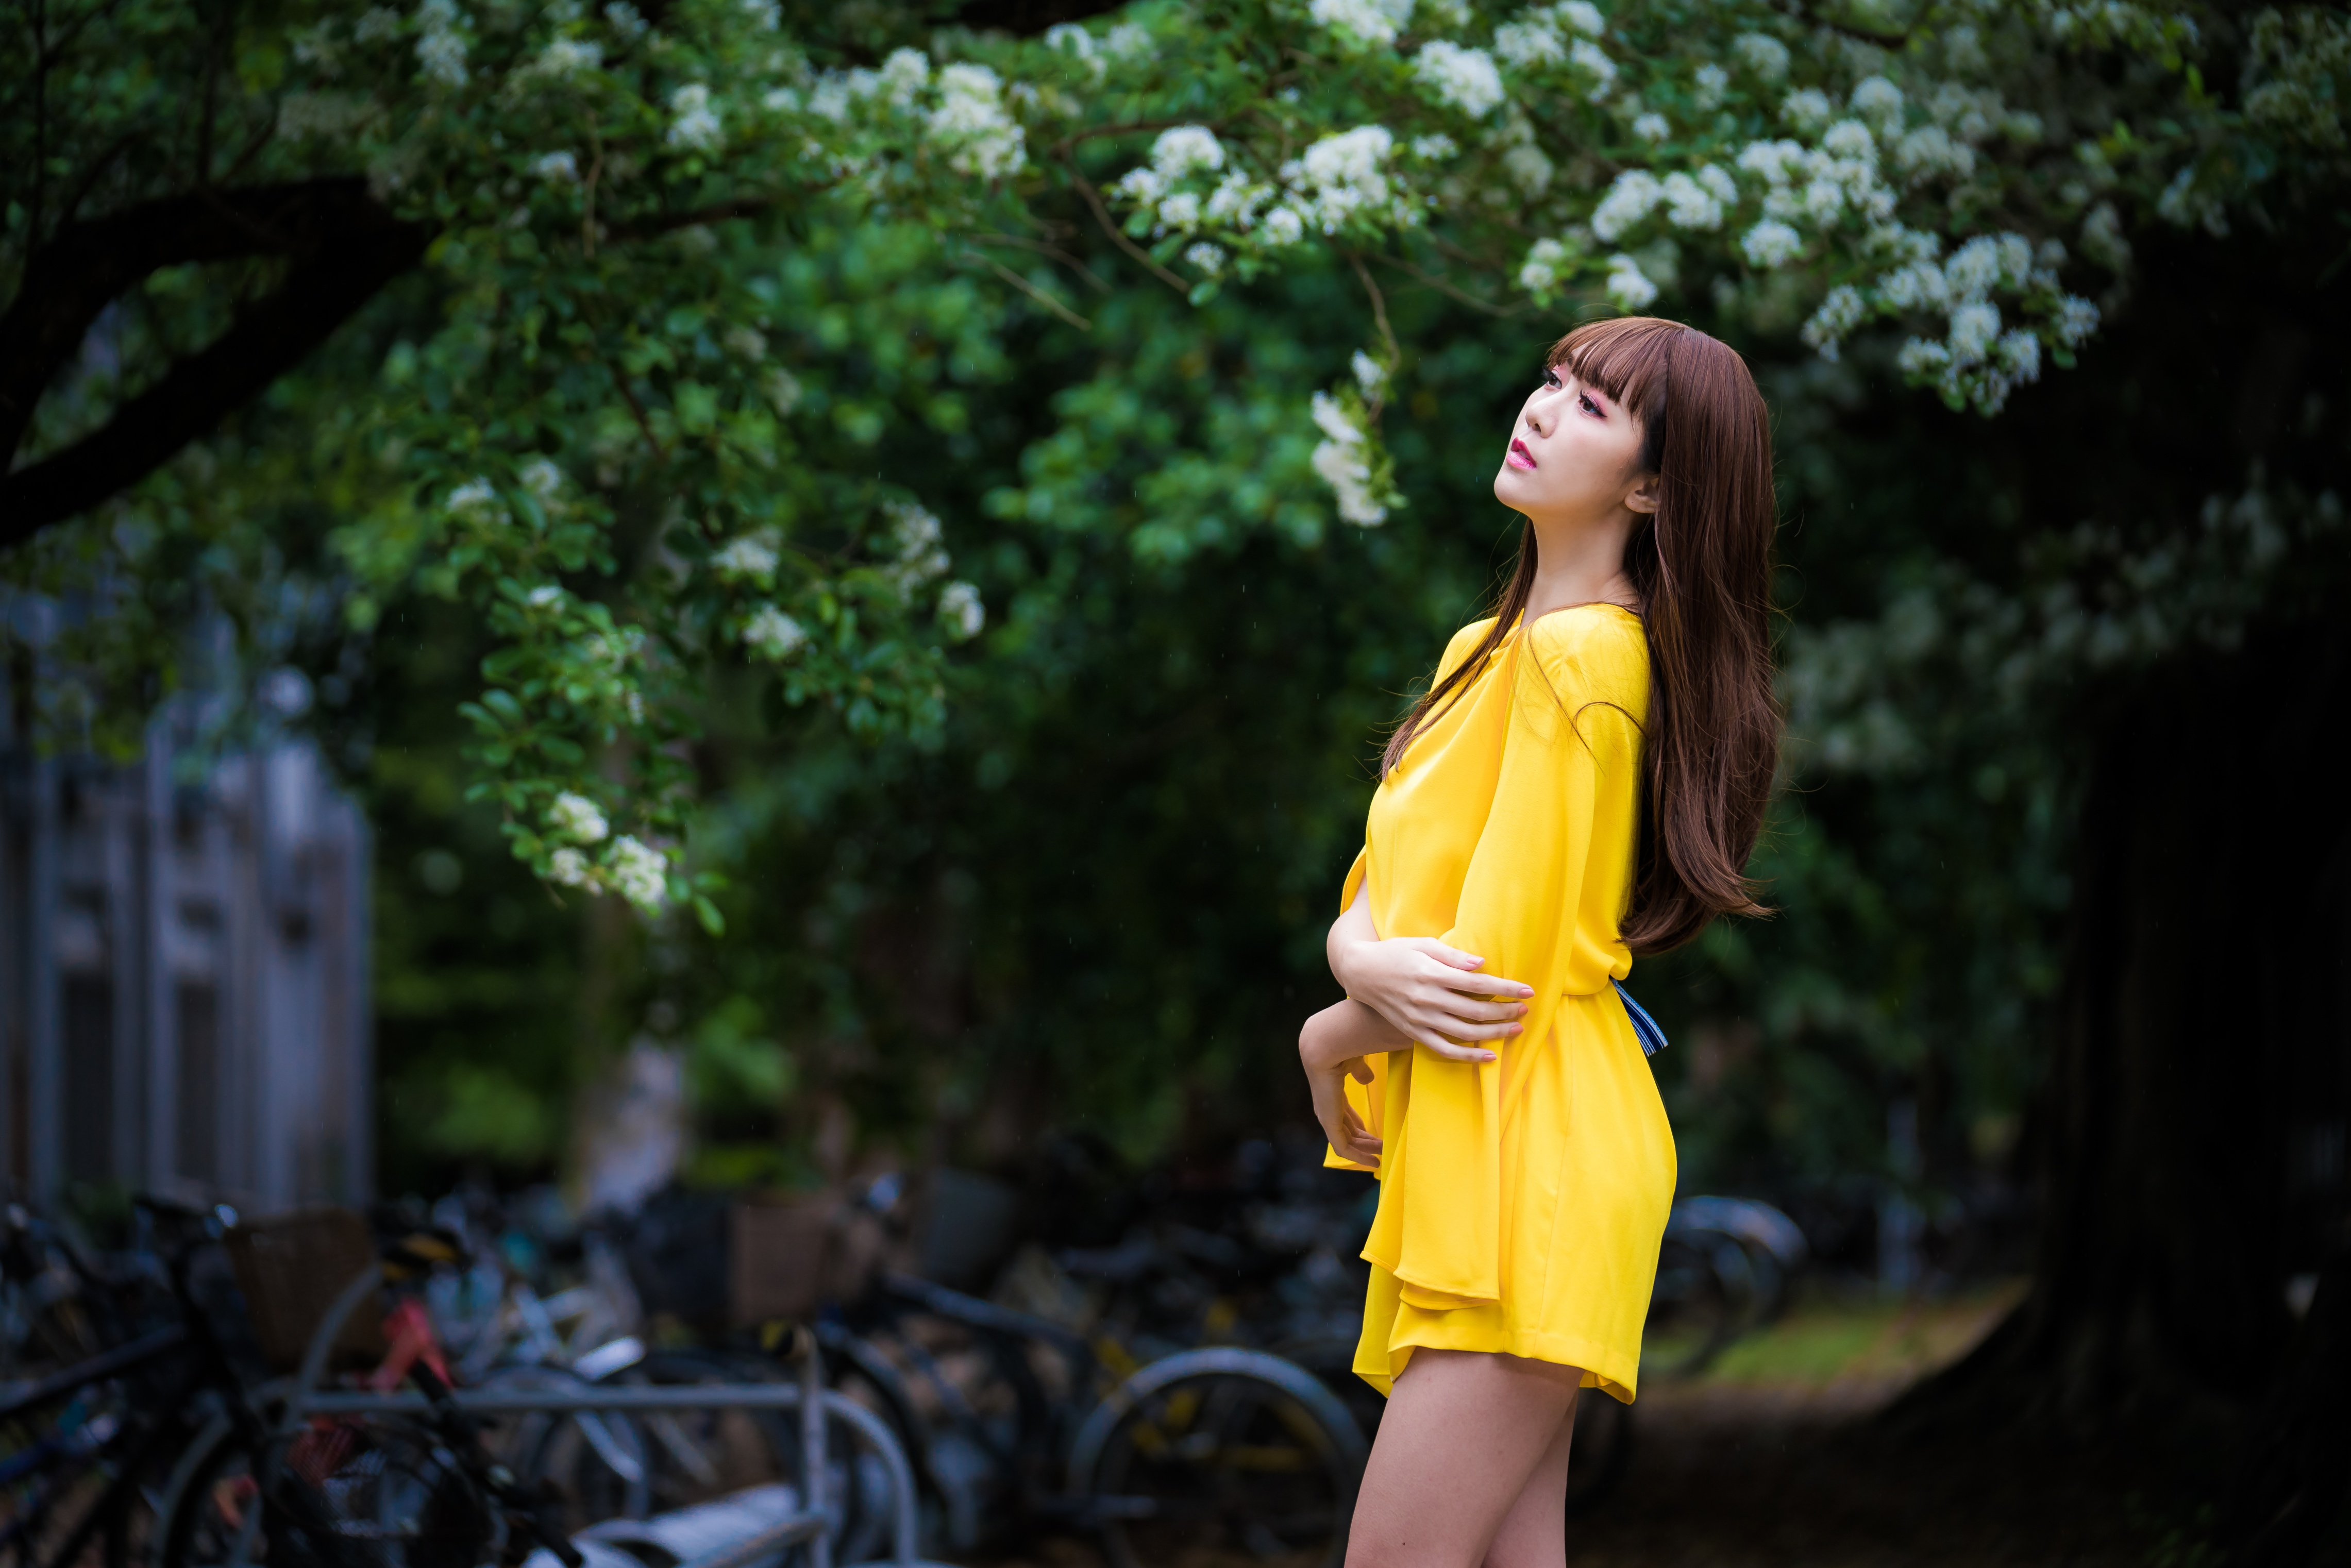 People 4562x3043 Asian women model long hair brunette depth of field yellow dress bicycle trees looking away